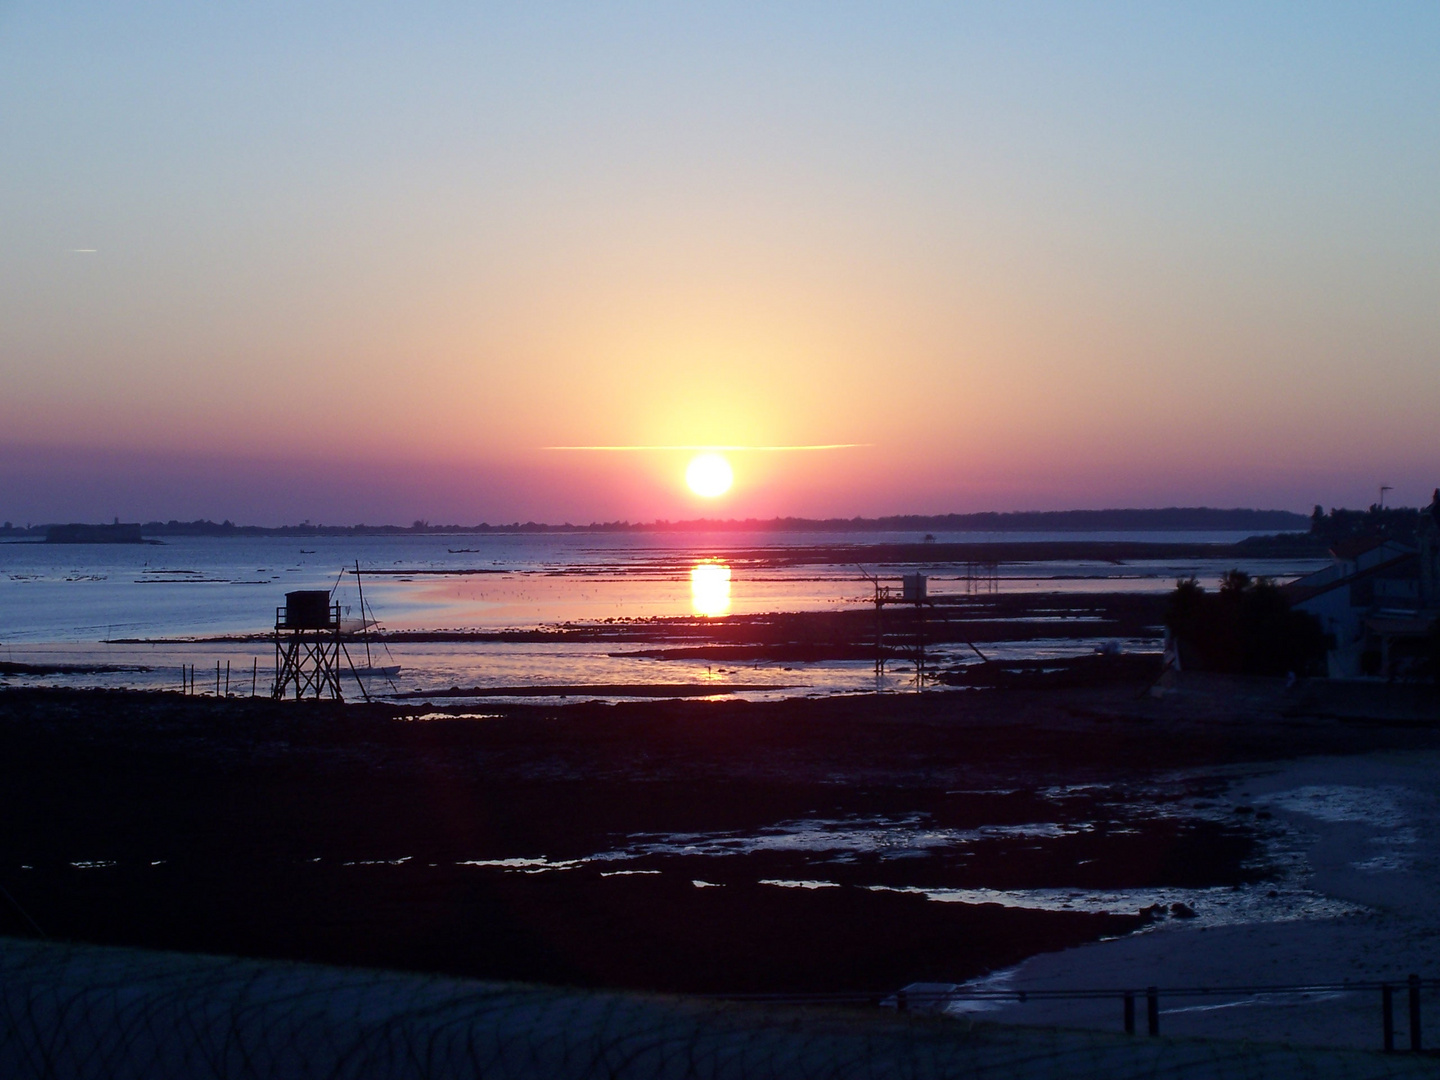 Frankreich am Strand - ein Sonnenuntergang